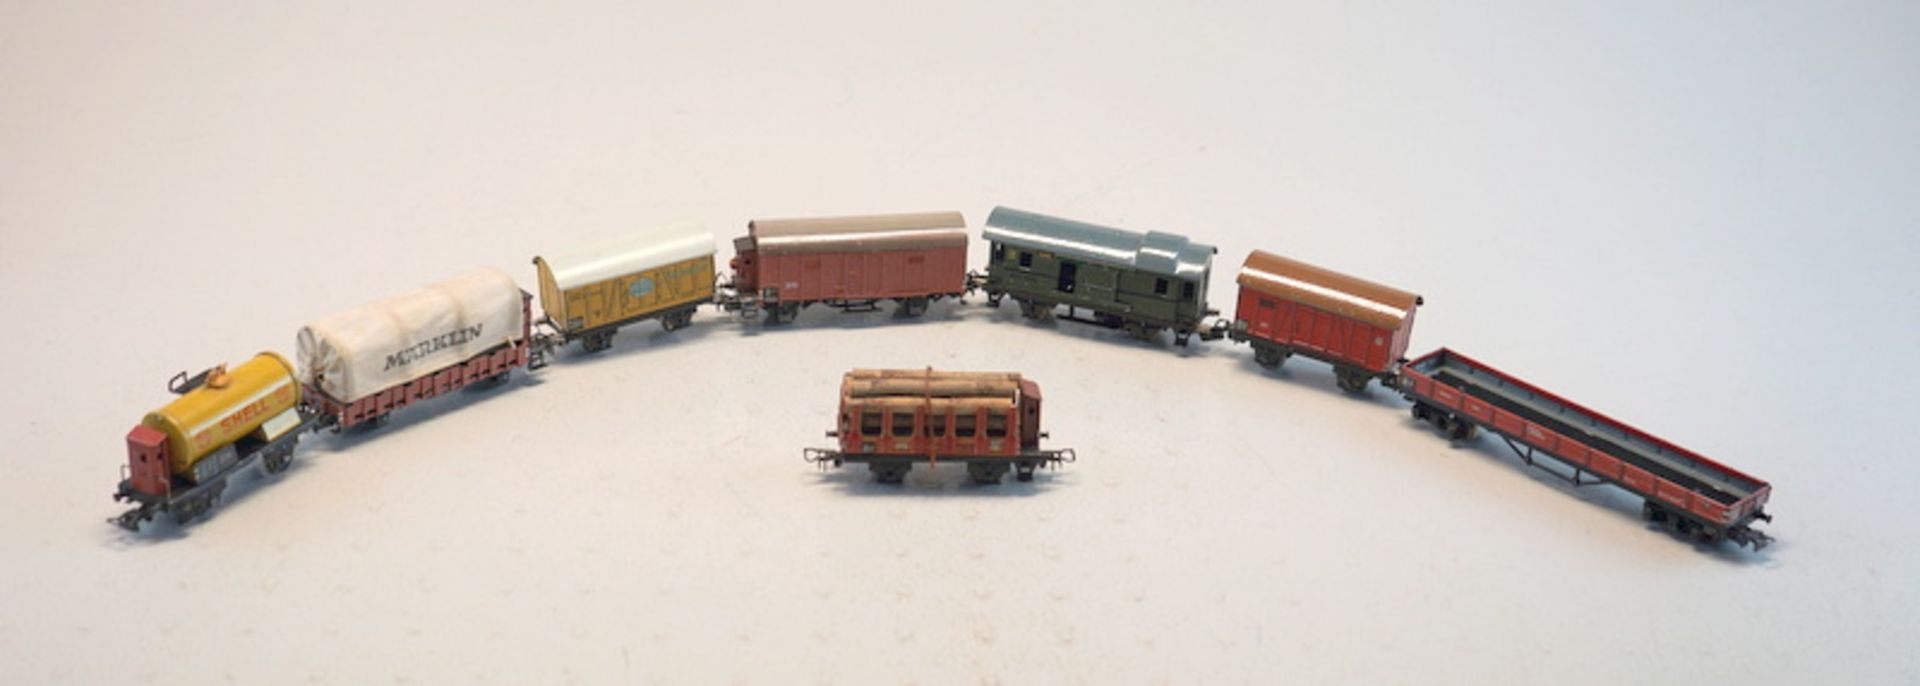 Märklin 1929ff, Gebr. Märklin & Cie., G.m.b.H. Göppingen: Sammlung von 8 historischen Güterwagen, Sp